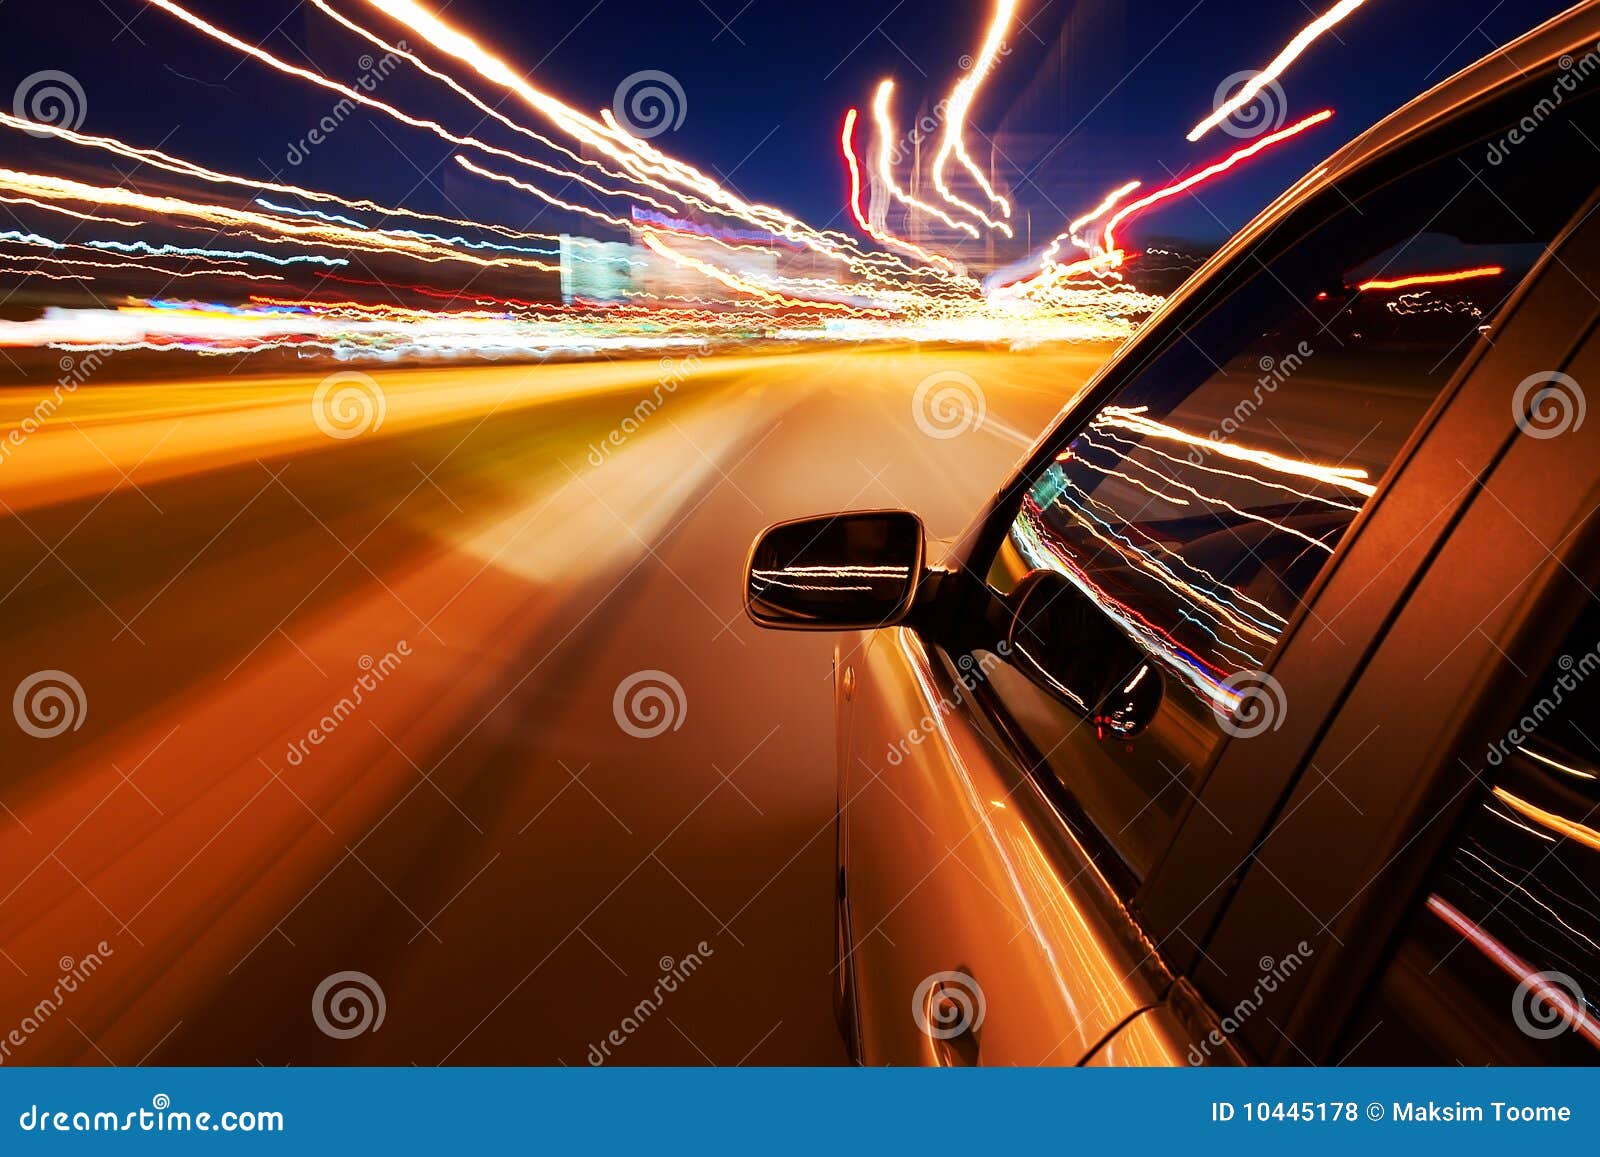 car driving fast